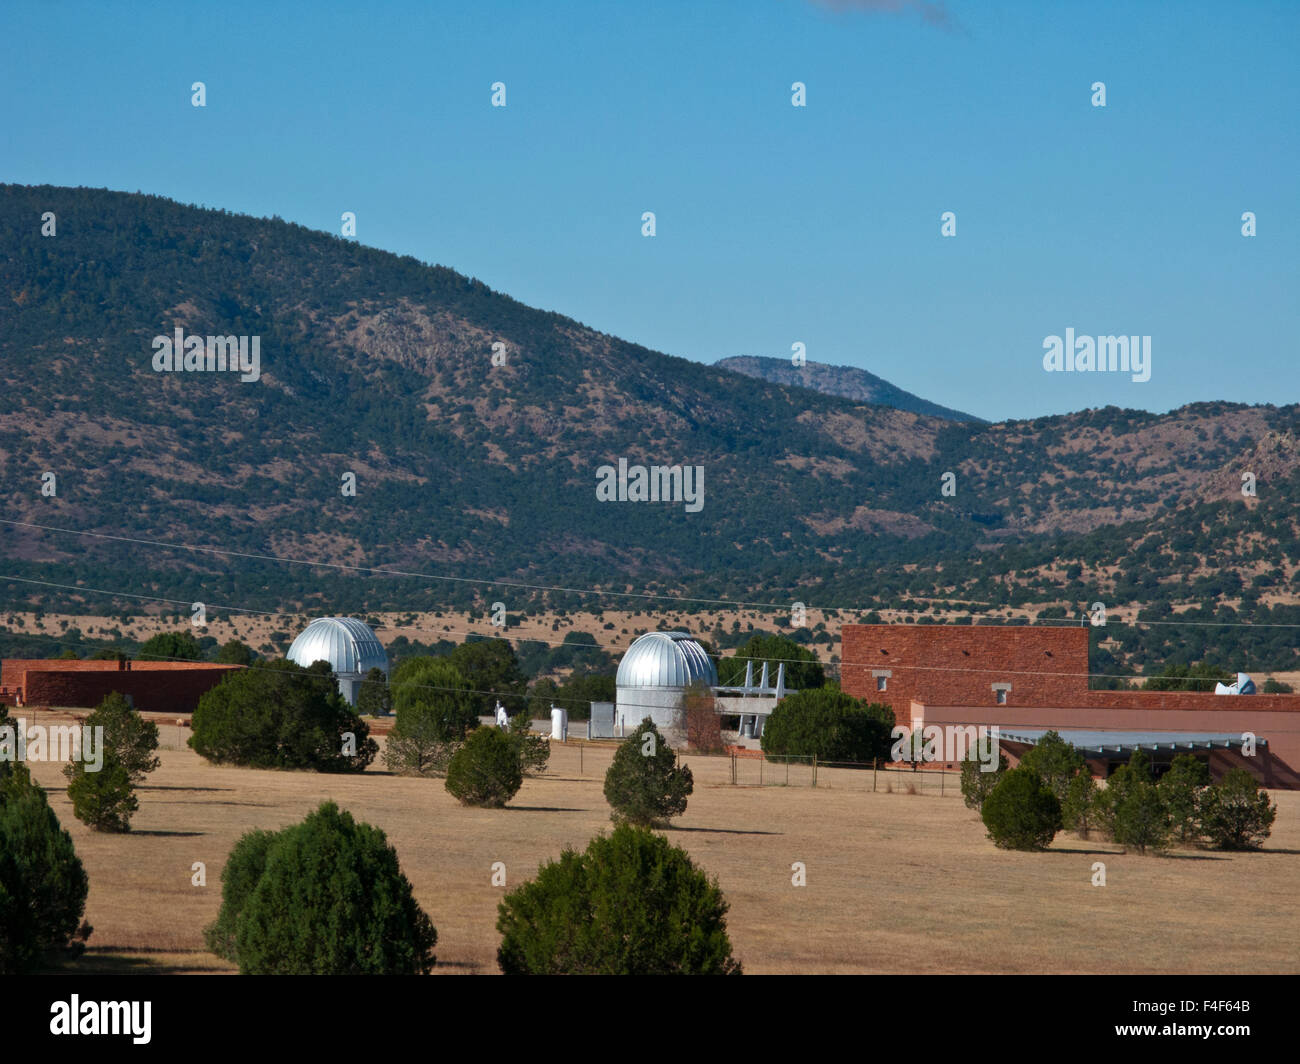 USA, Fort Davis, Texas, McDonald-Observatoriums Panoramablick Visitor Center und Star Parteien Observatorium Gebäude. Stockfoto